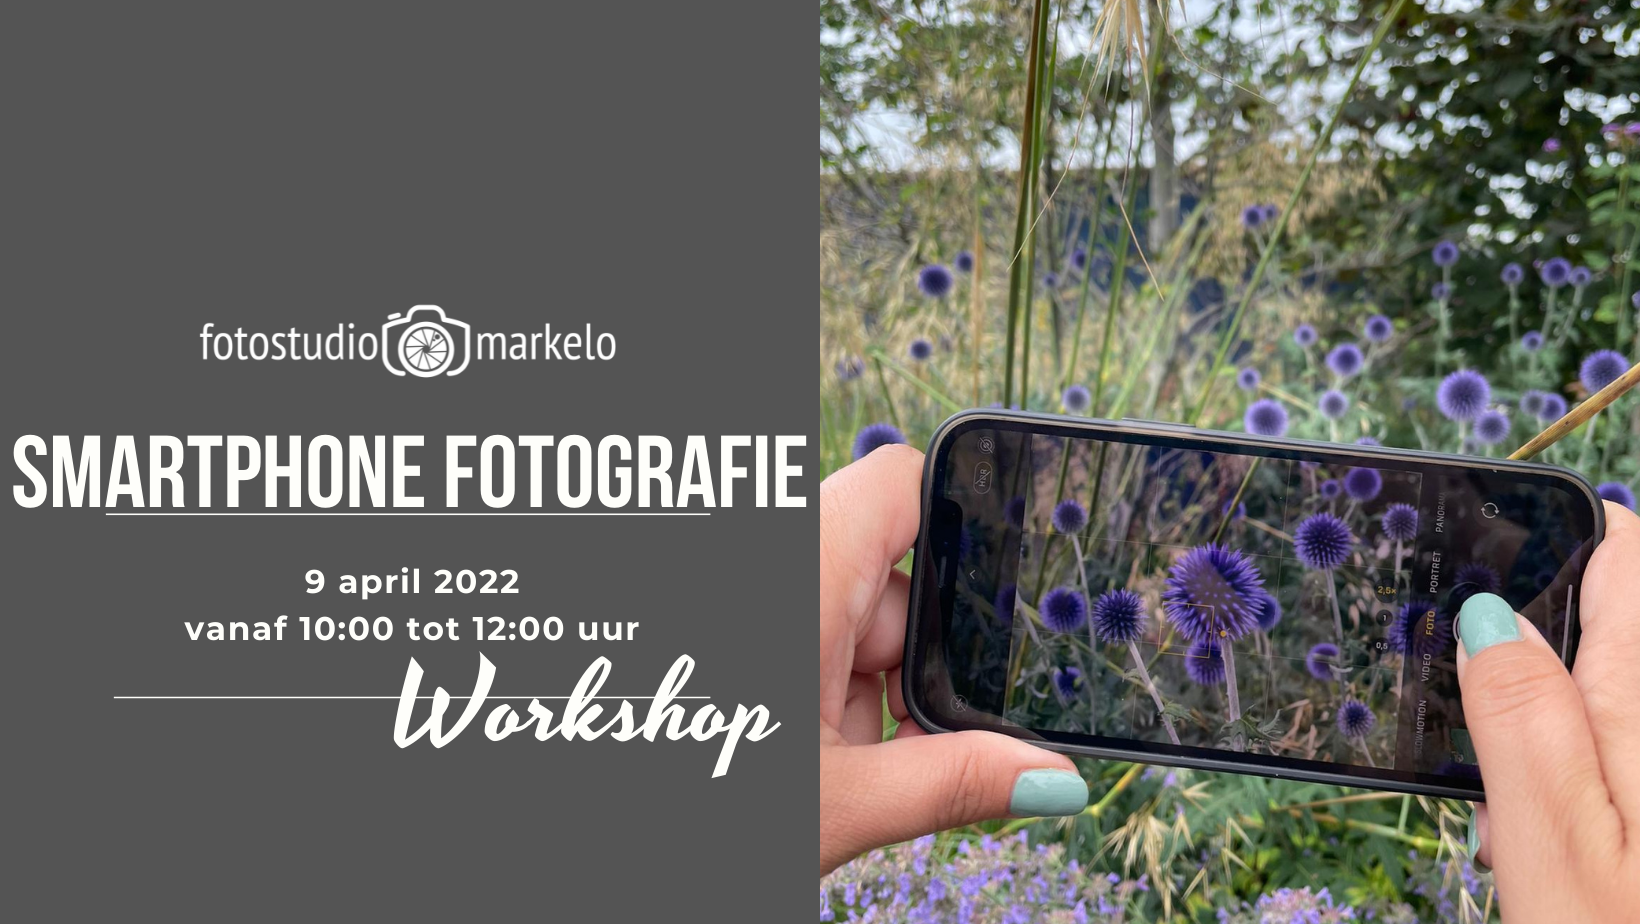 agenda-fotostudio-markelo-verzinhet-fotografie-workshop-smartphone-fotografie